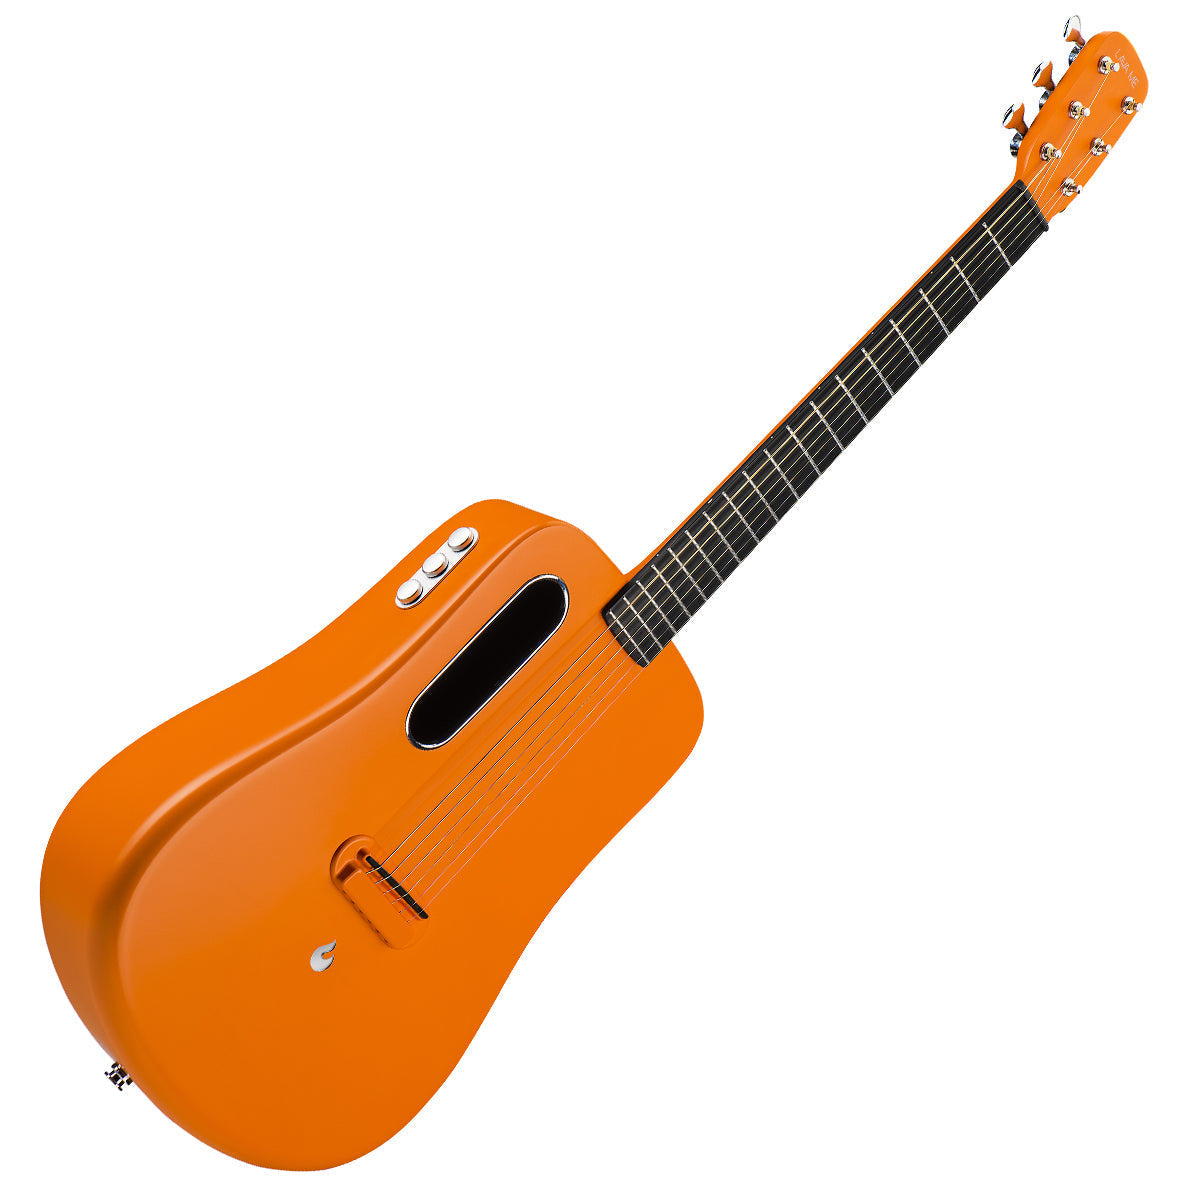 LAVA ME 2 FreeBoost ~ Orange, Acoustic Guitar for sale at Richards Guitars.